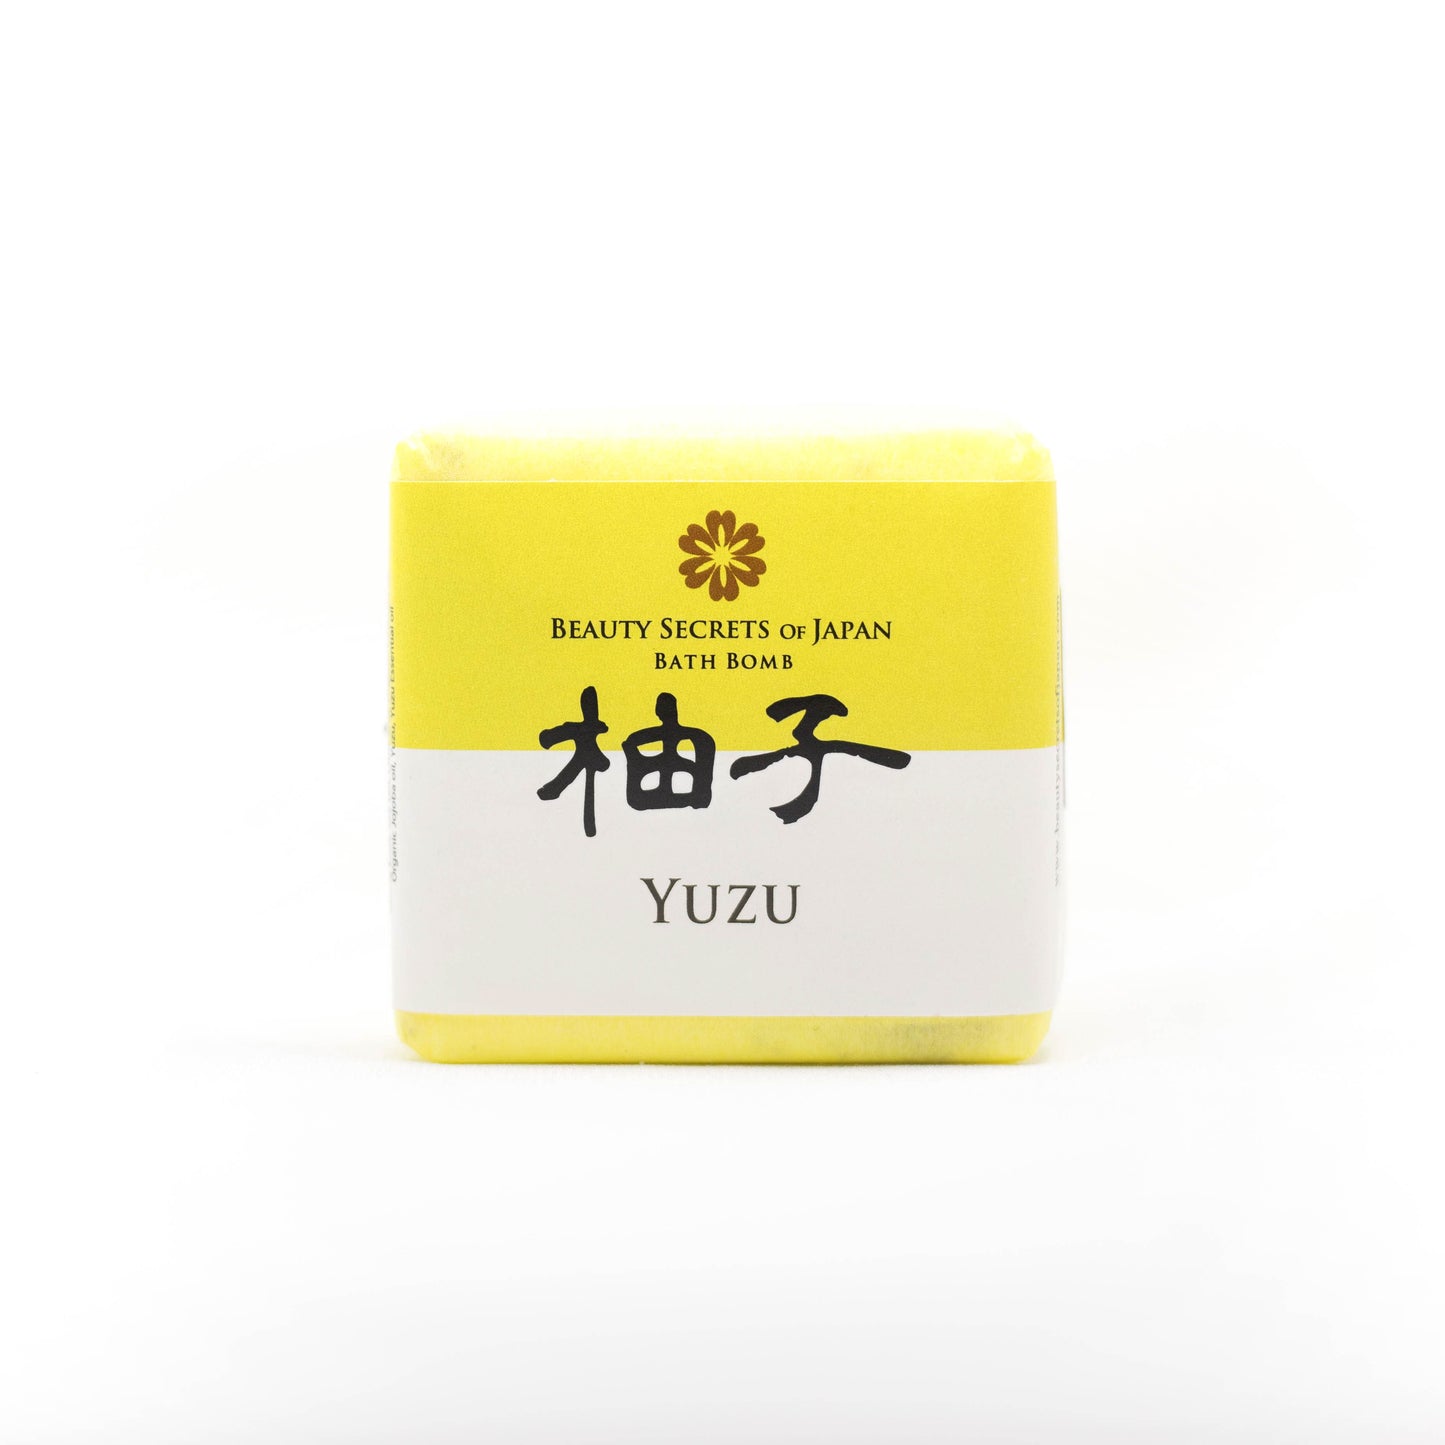 Bath Bomb - Yuzu (Japanese citrus)